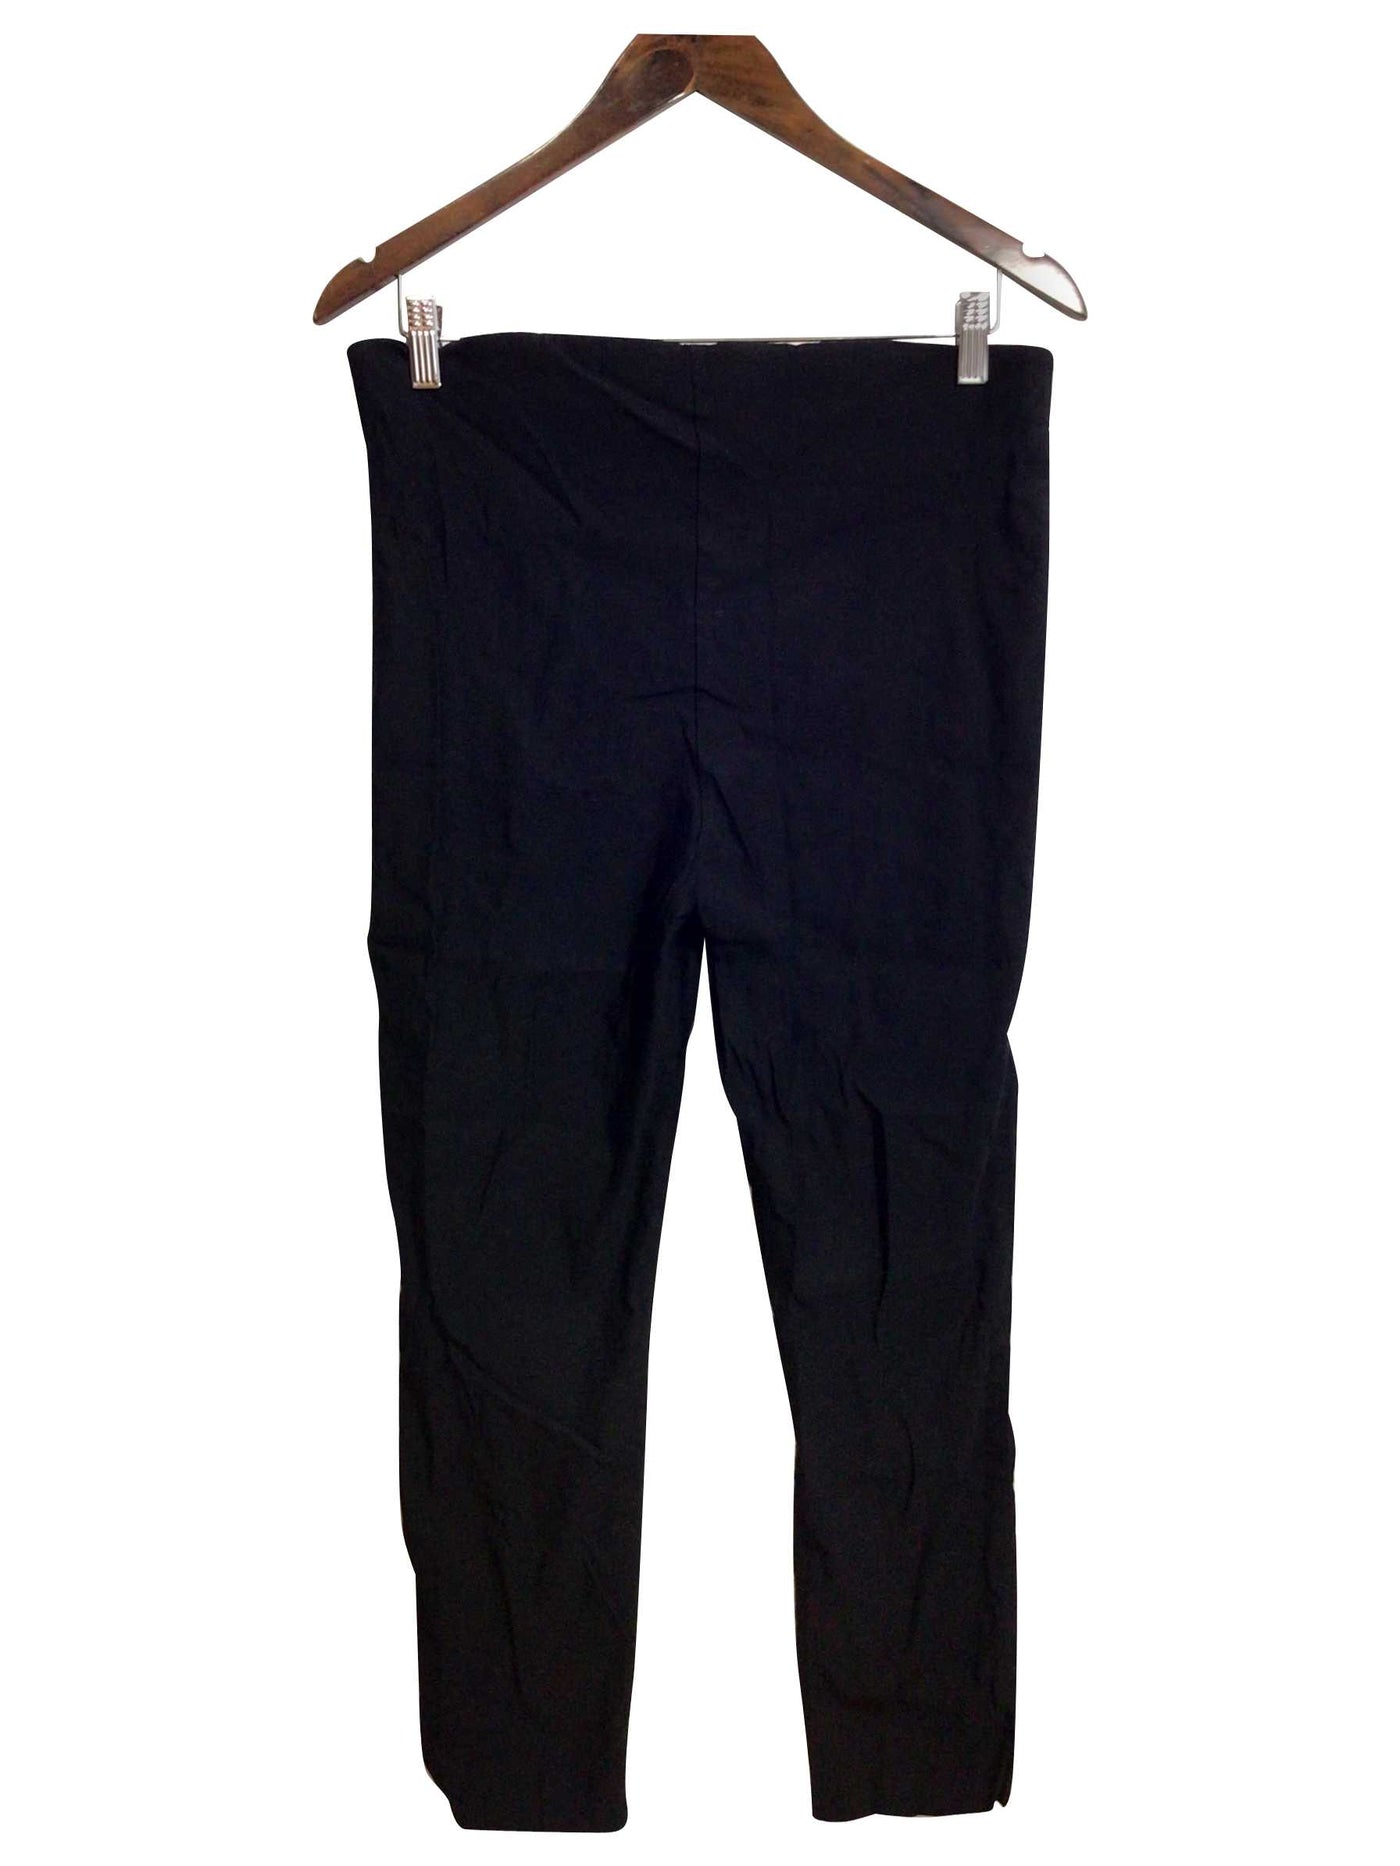 JOE FRESH Regular fit Pant in Black - Size 12 | 14 $ KOOP